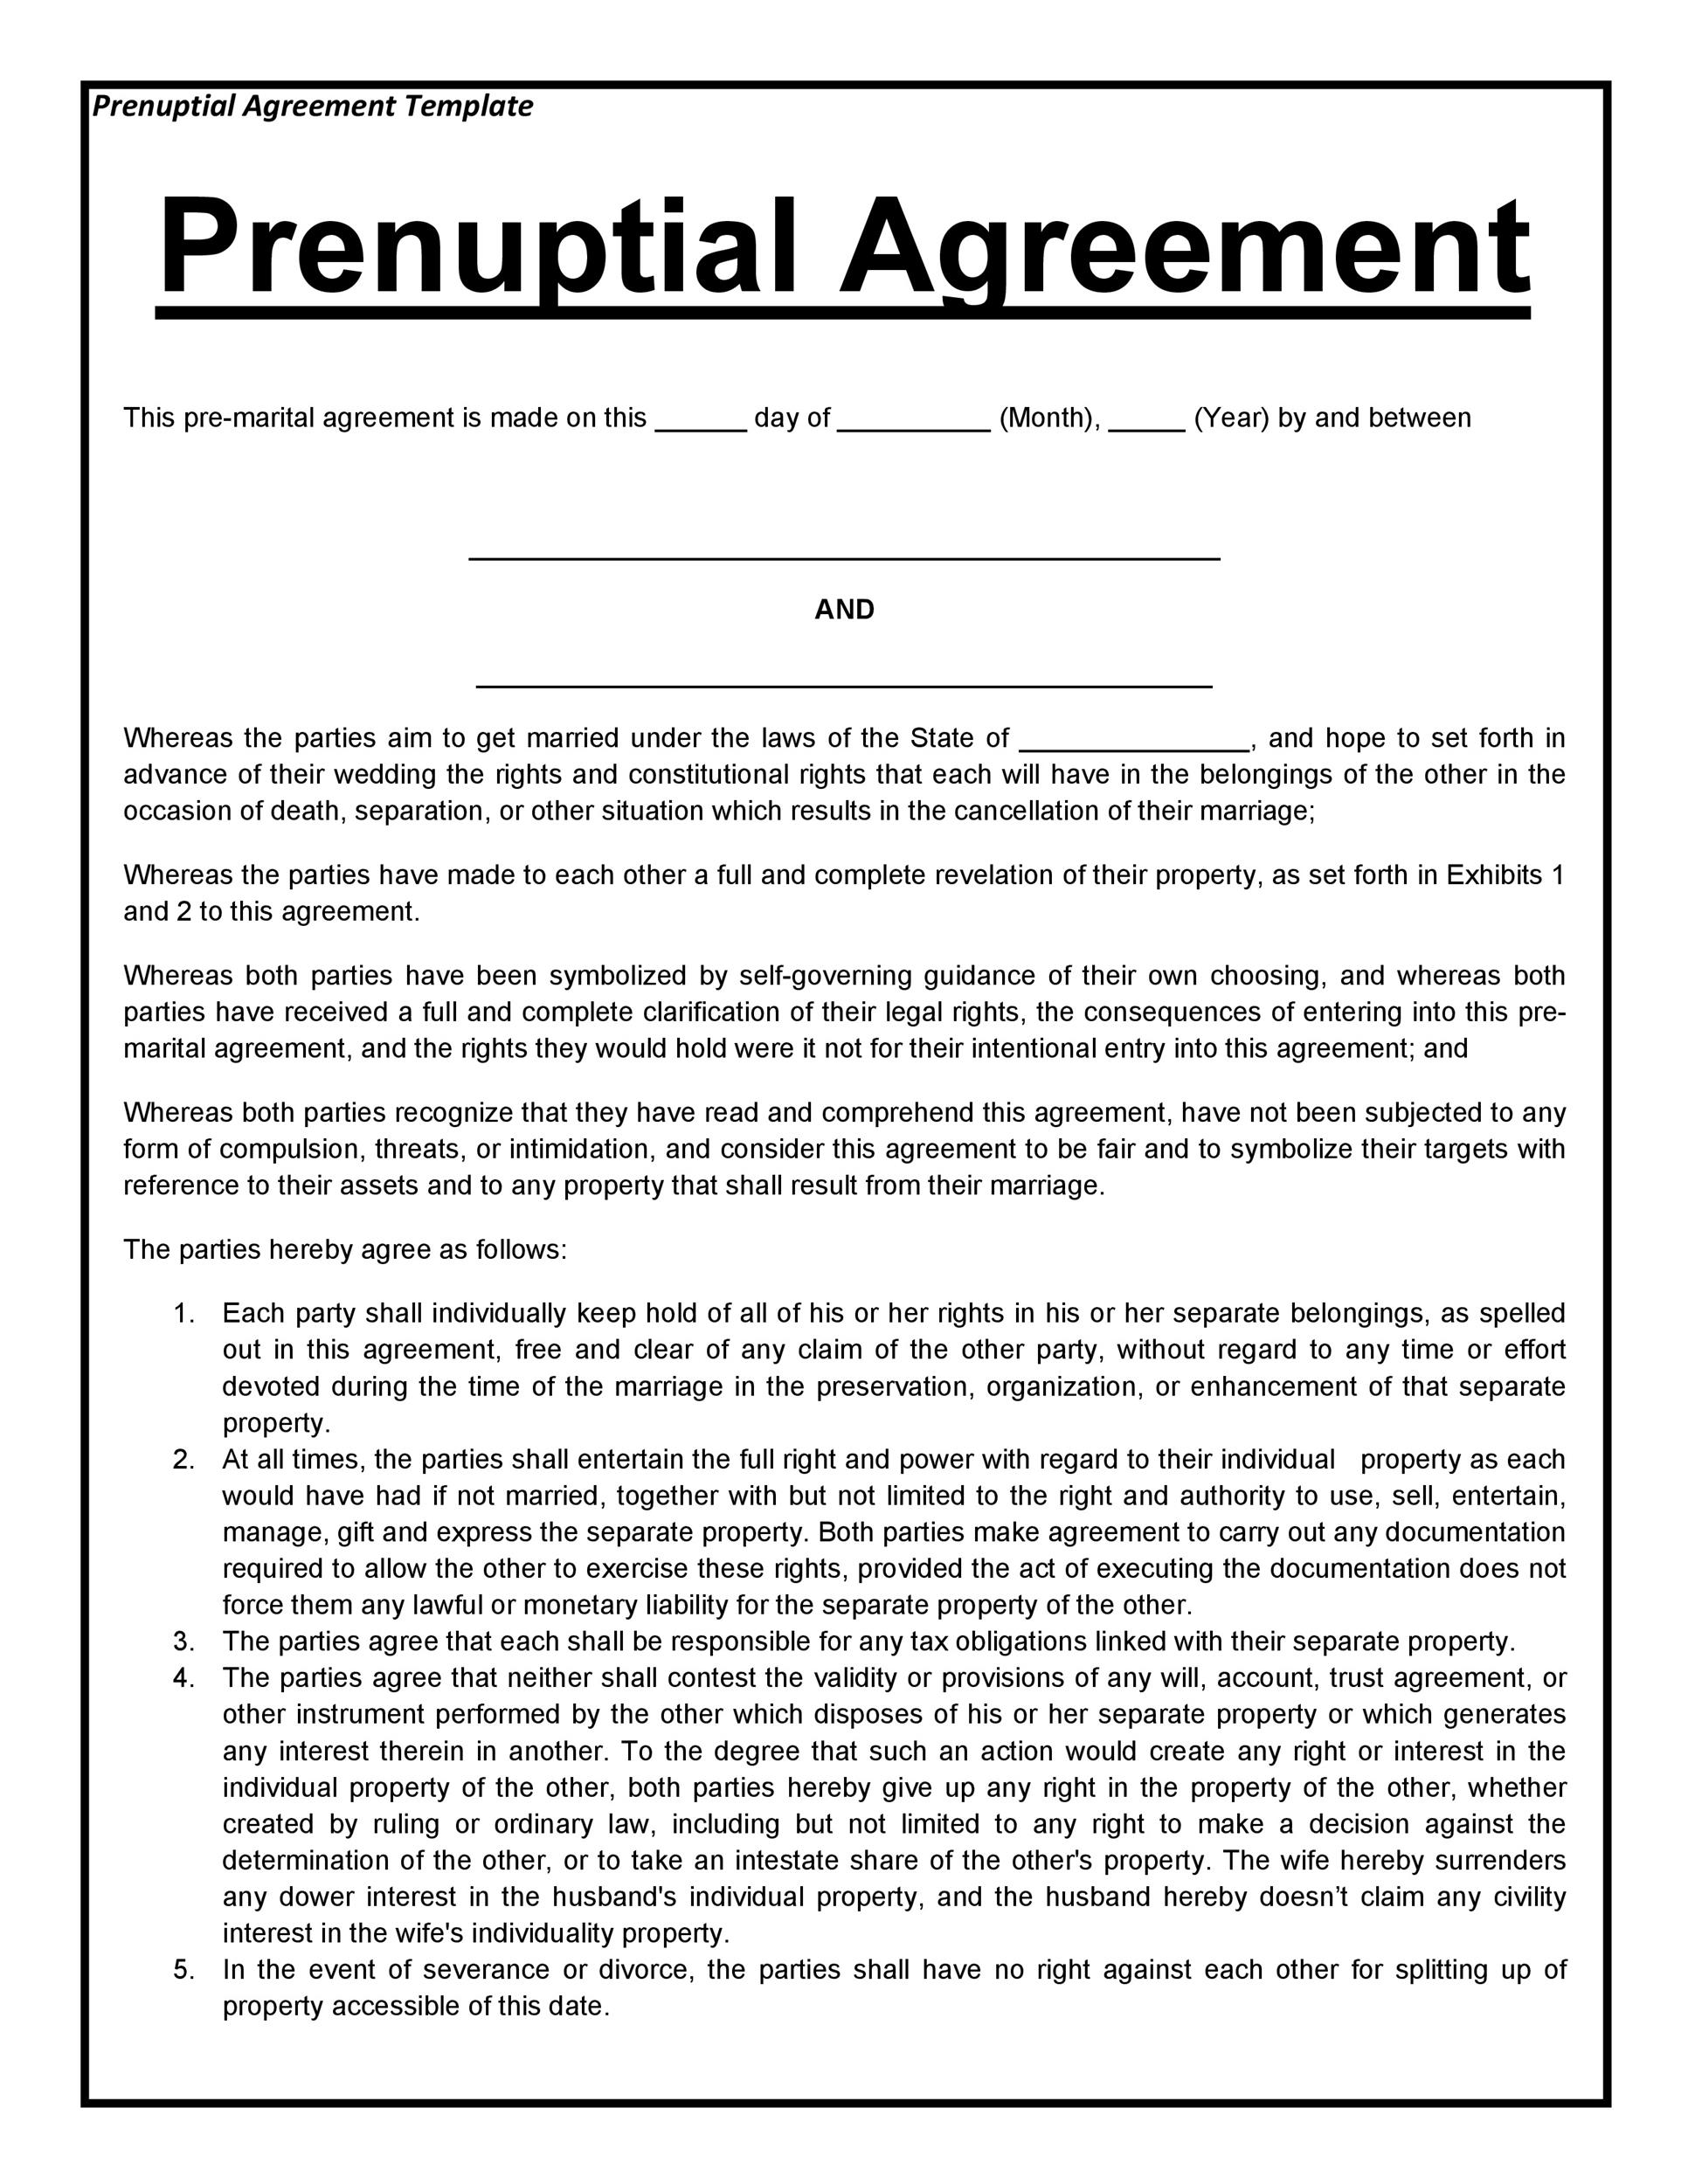 30+ Prenuptial Agreement Samples & Forms ᐅ TemplateLab